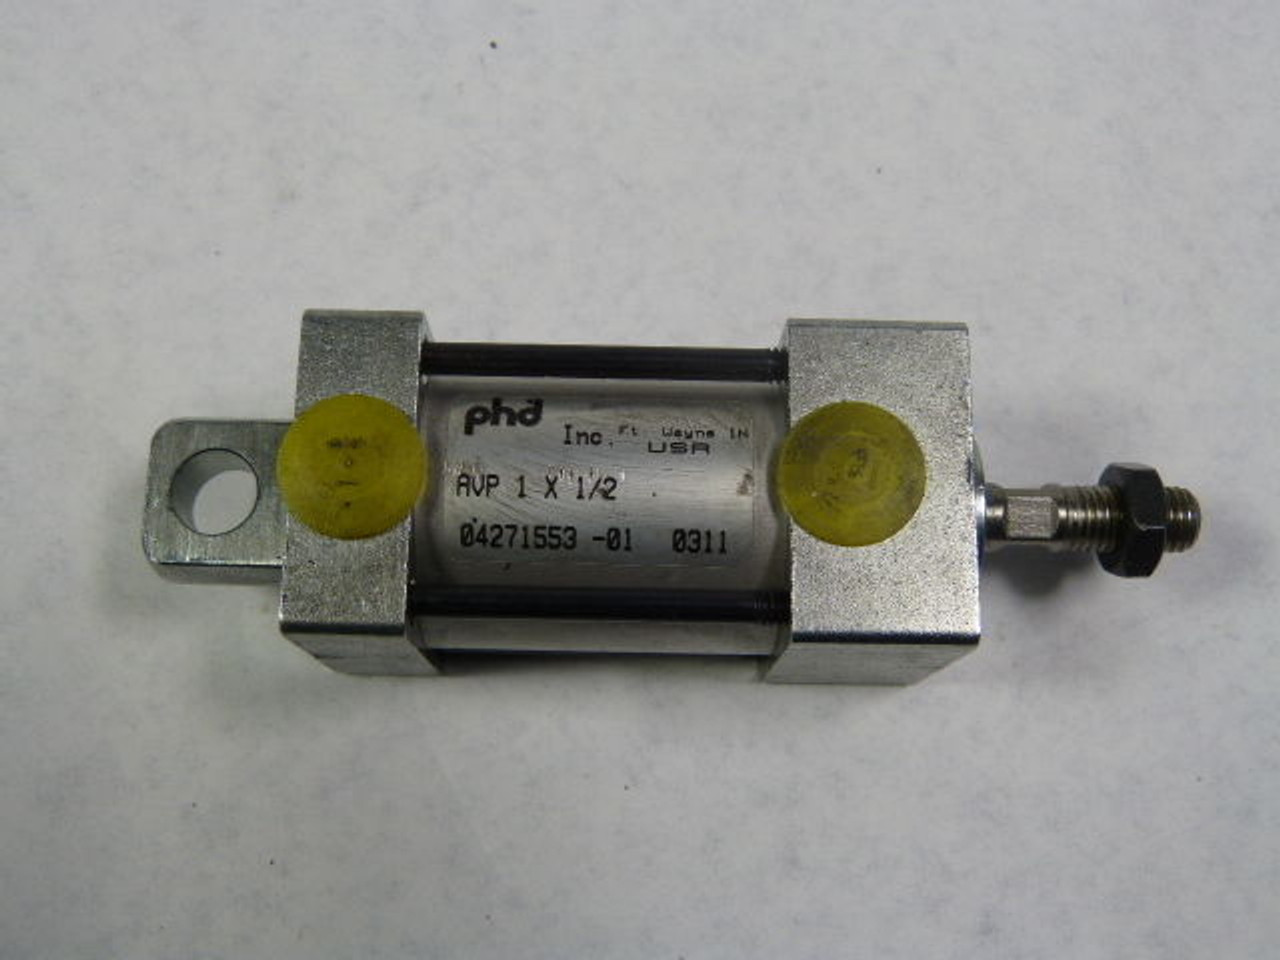 Phd AVP1X1/2 Pneumatic Cylinder 1" Bore 1/2" Stroke USED